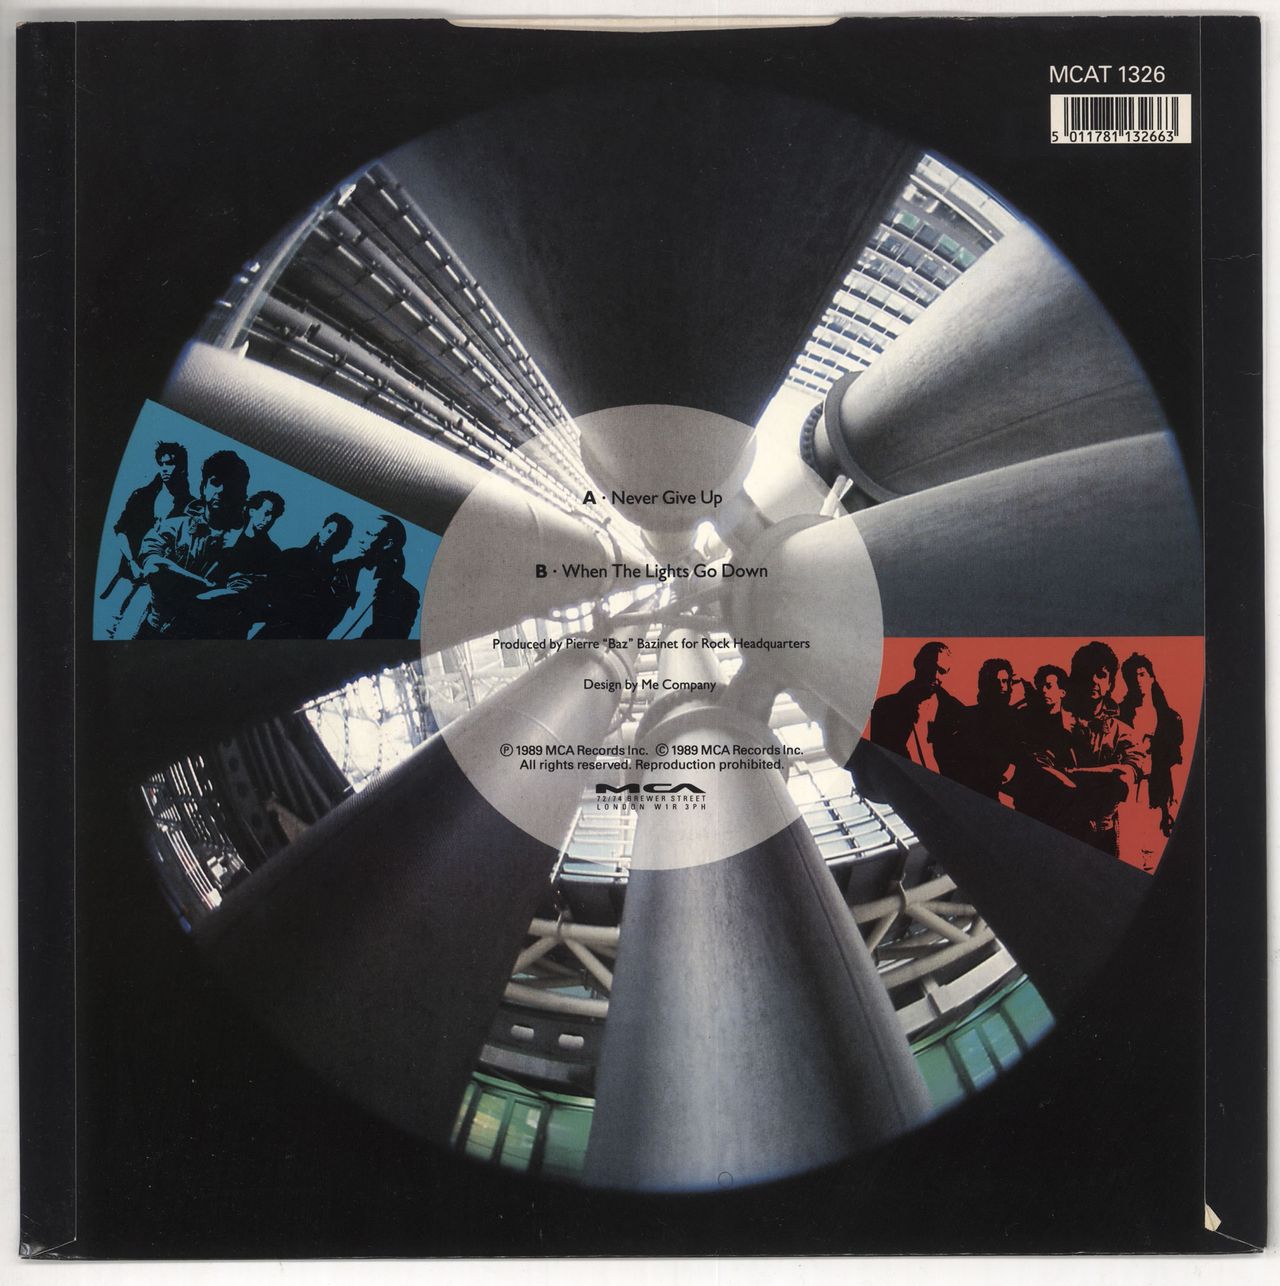 LV – Sebenza (2012, Vinyl) - Discogs